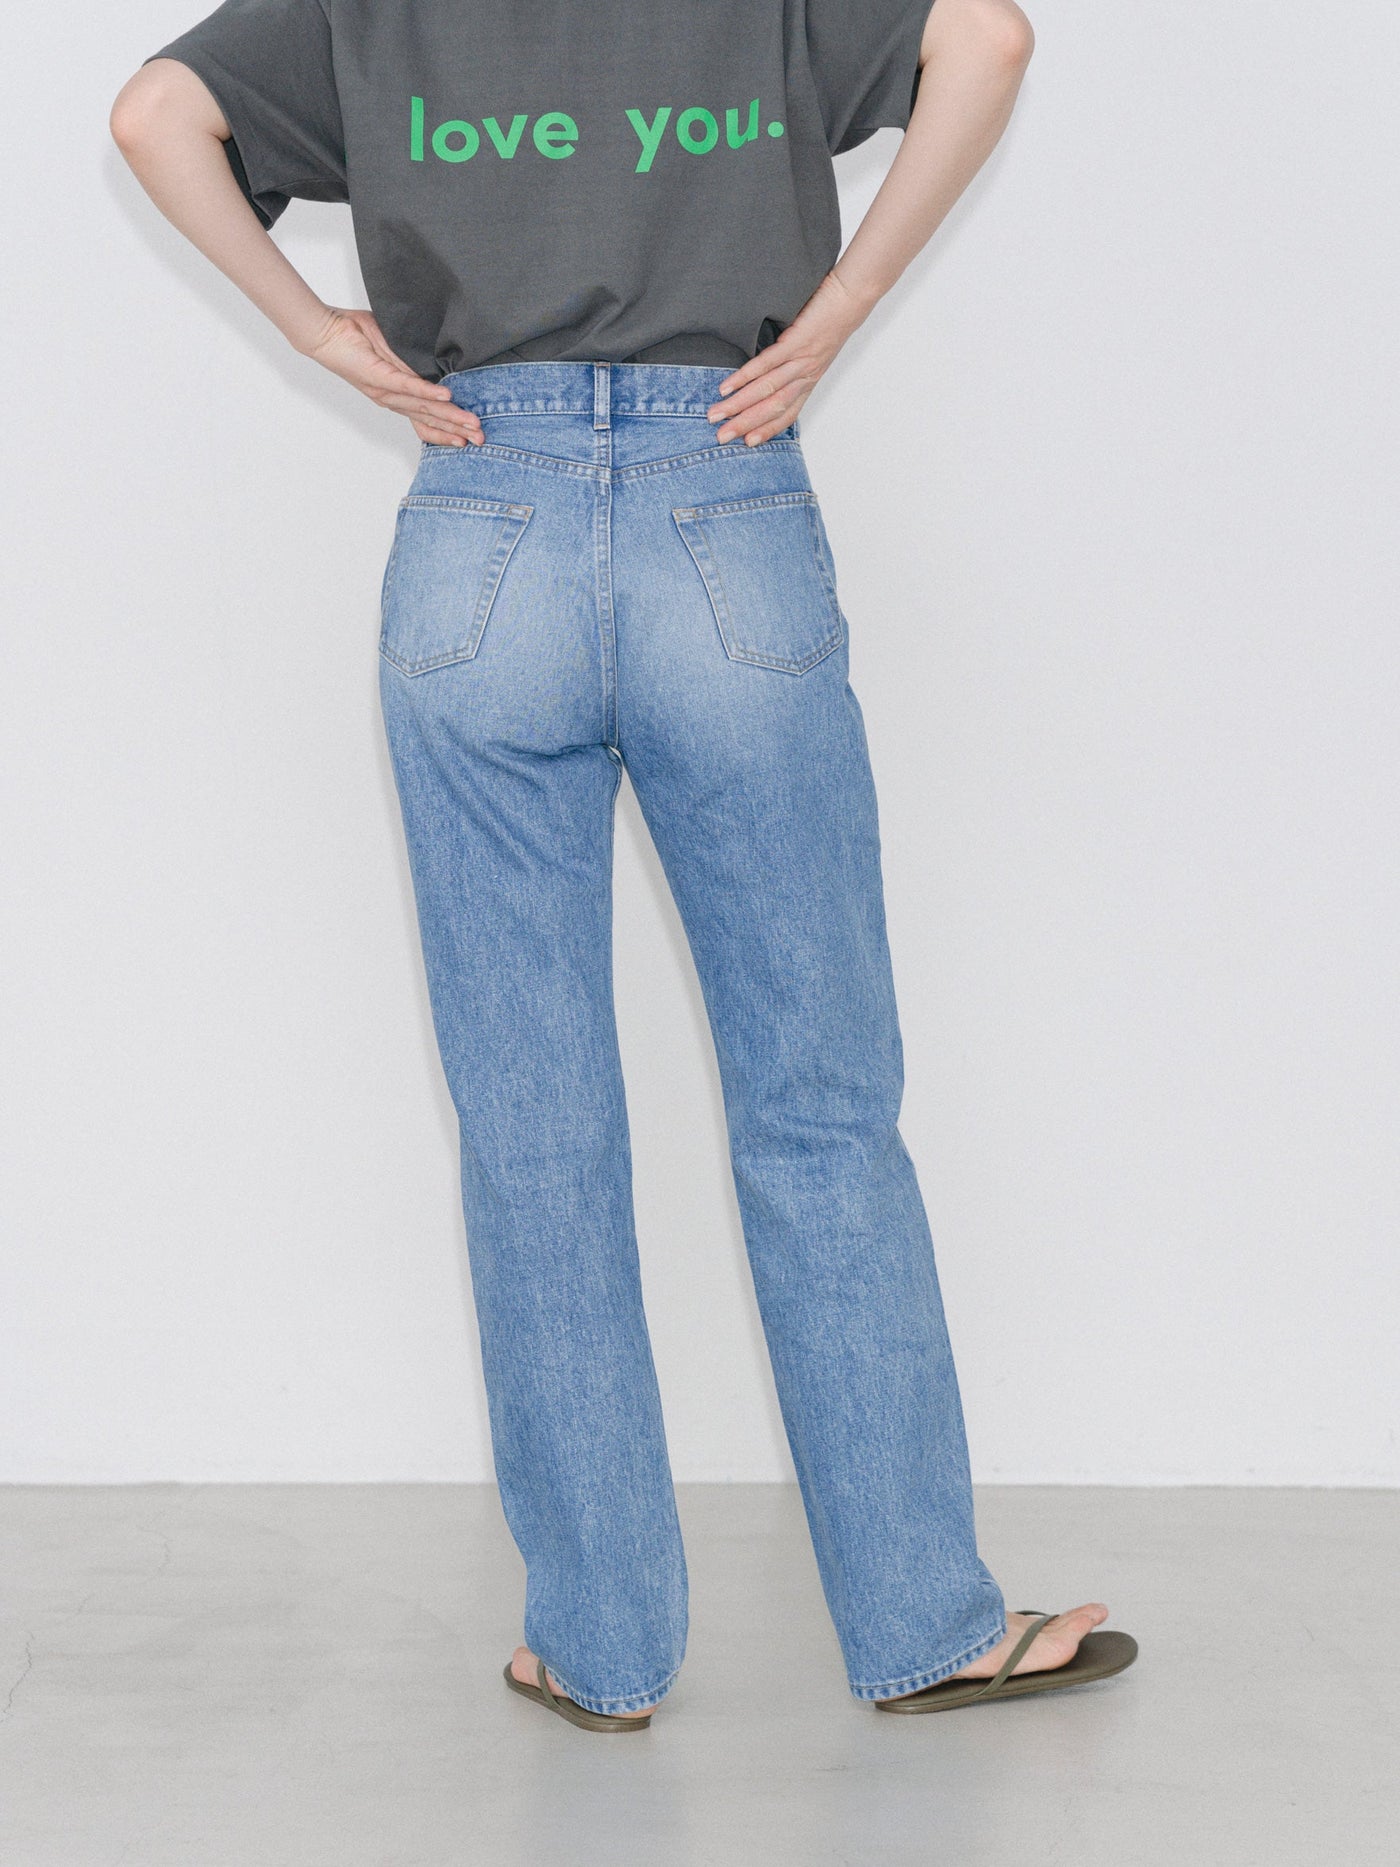 Go to jeans (size 1) – encircle onlineshop